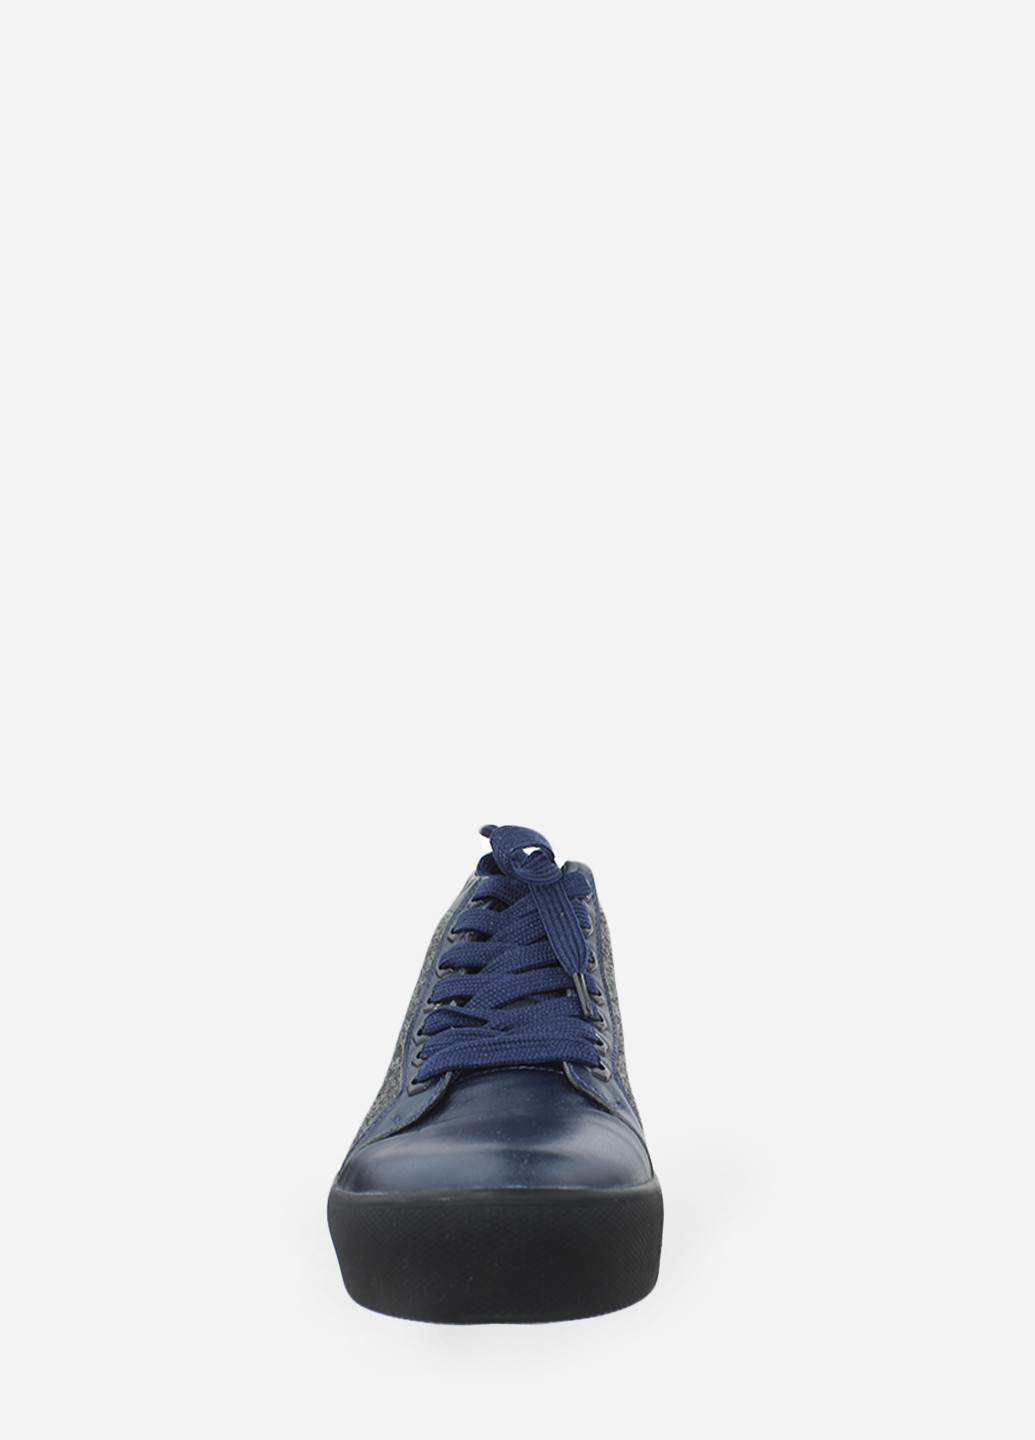 Осенние ботинки rdt132-2 синий-серый Daragani